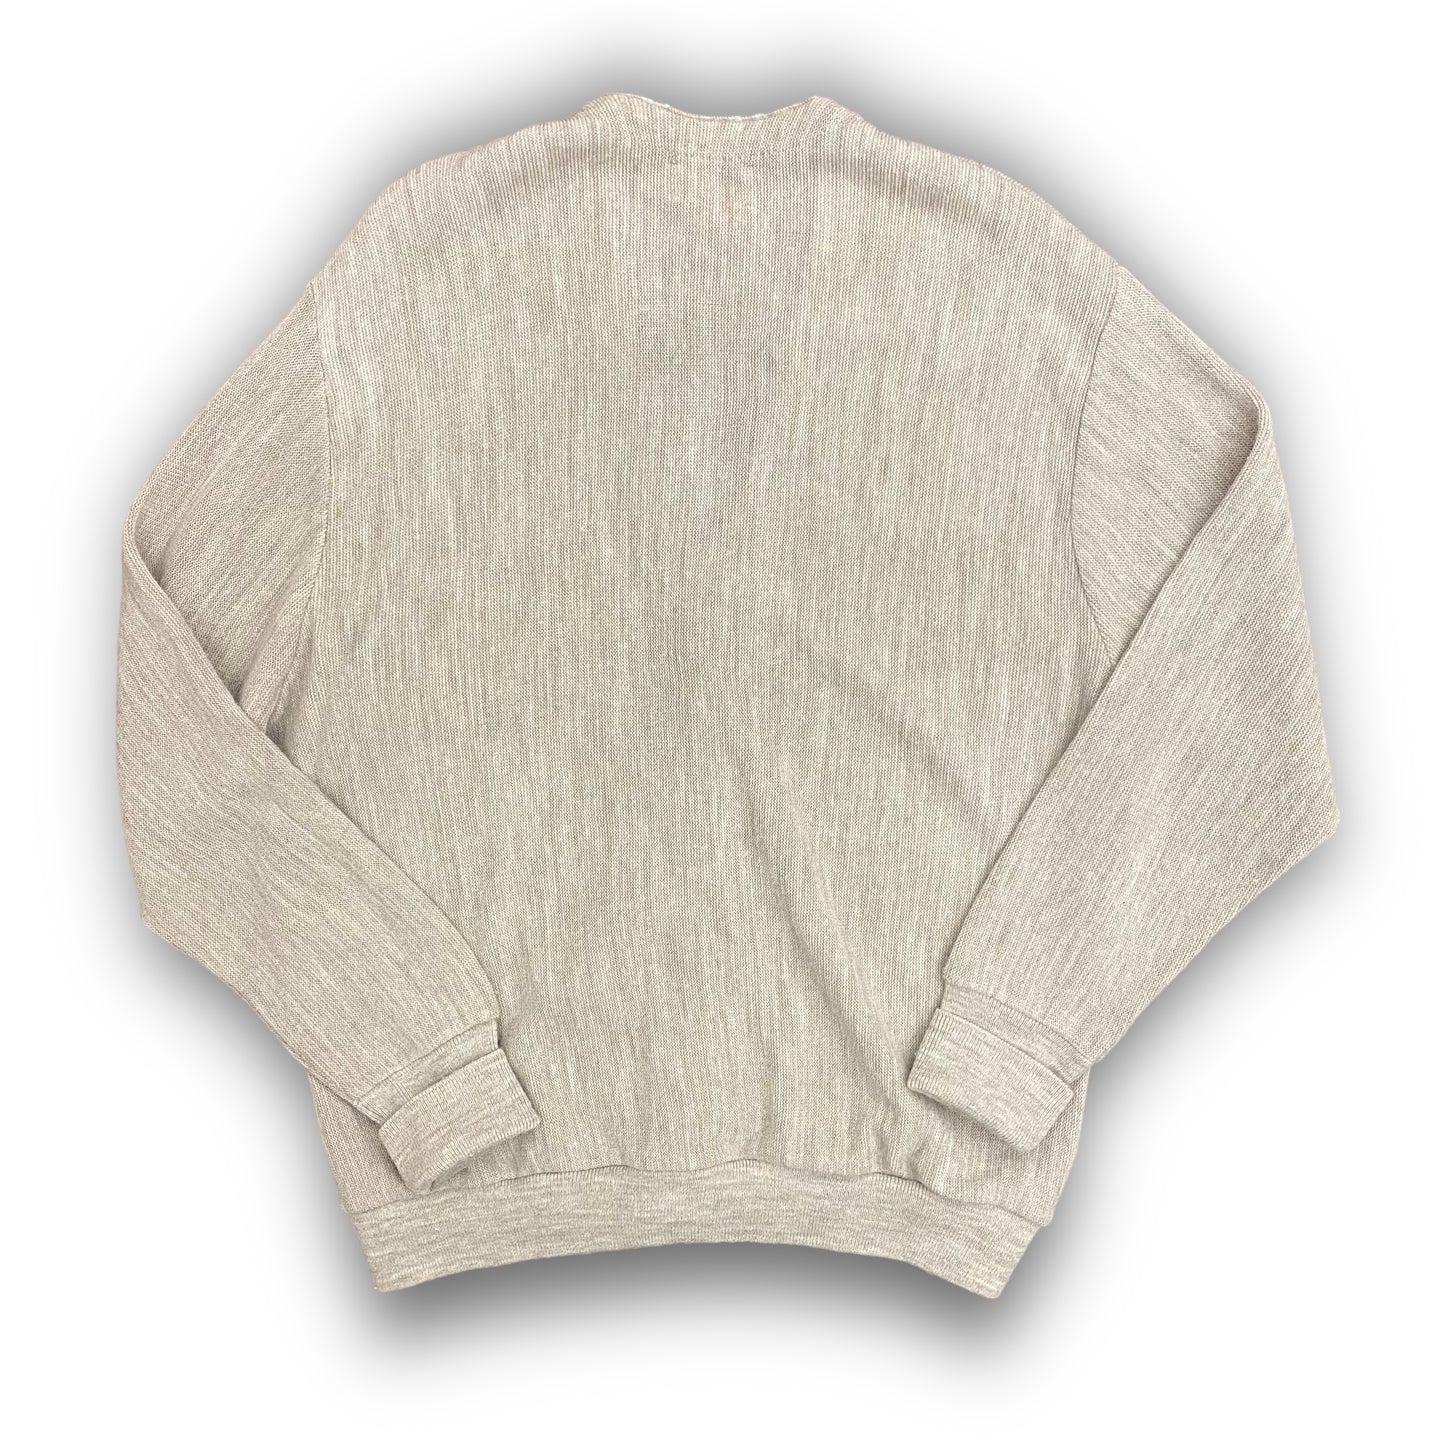 Vintage Tan Knit Acrylic Cardigan by Arrow Tournament - Size XL